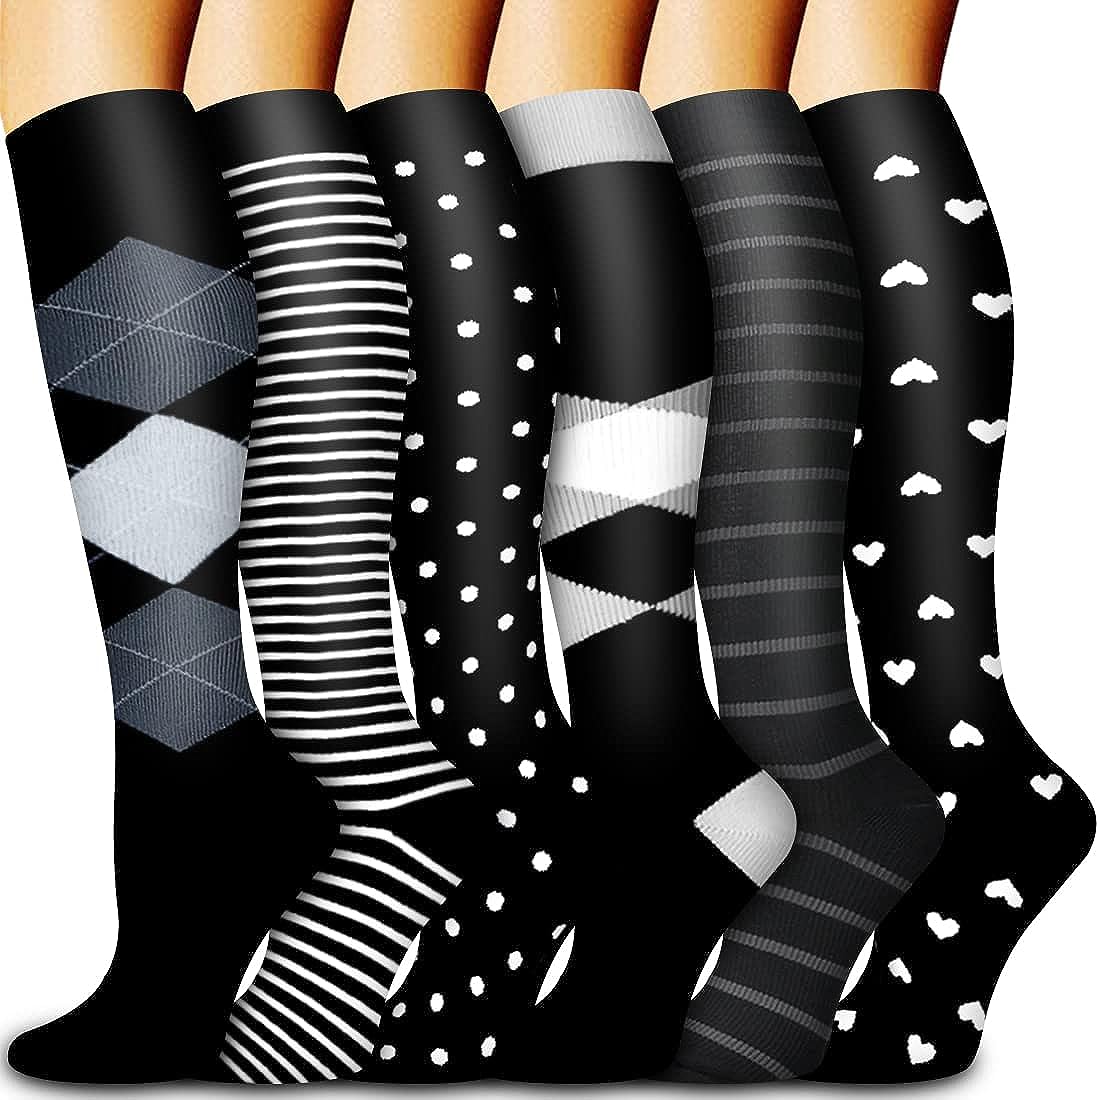 Bluemaple 6 Pack Copper Compression Socks for Women [...]